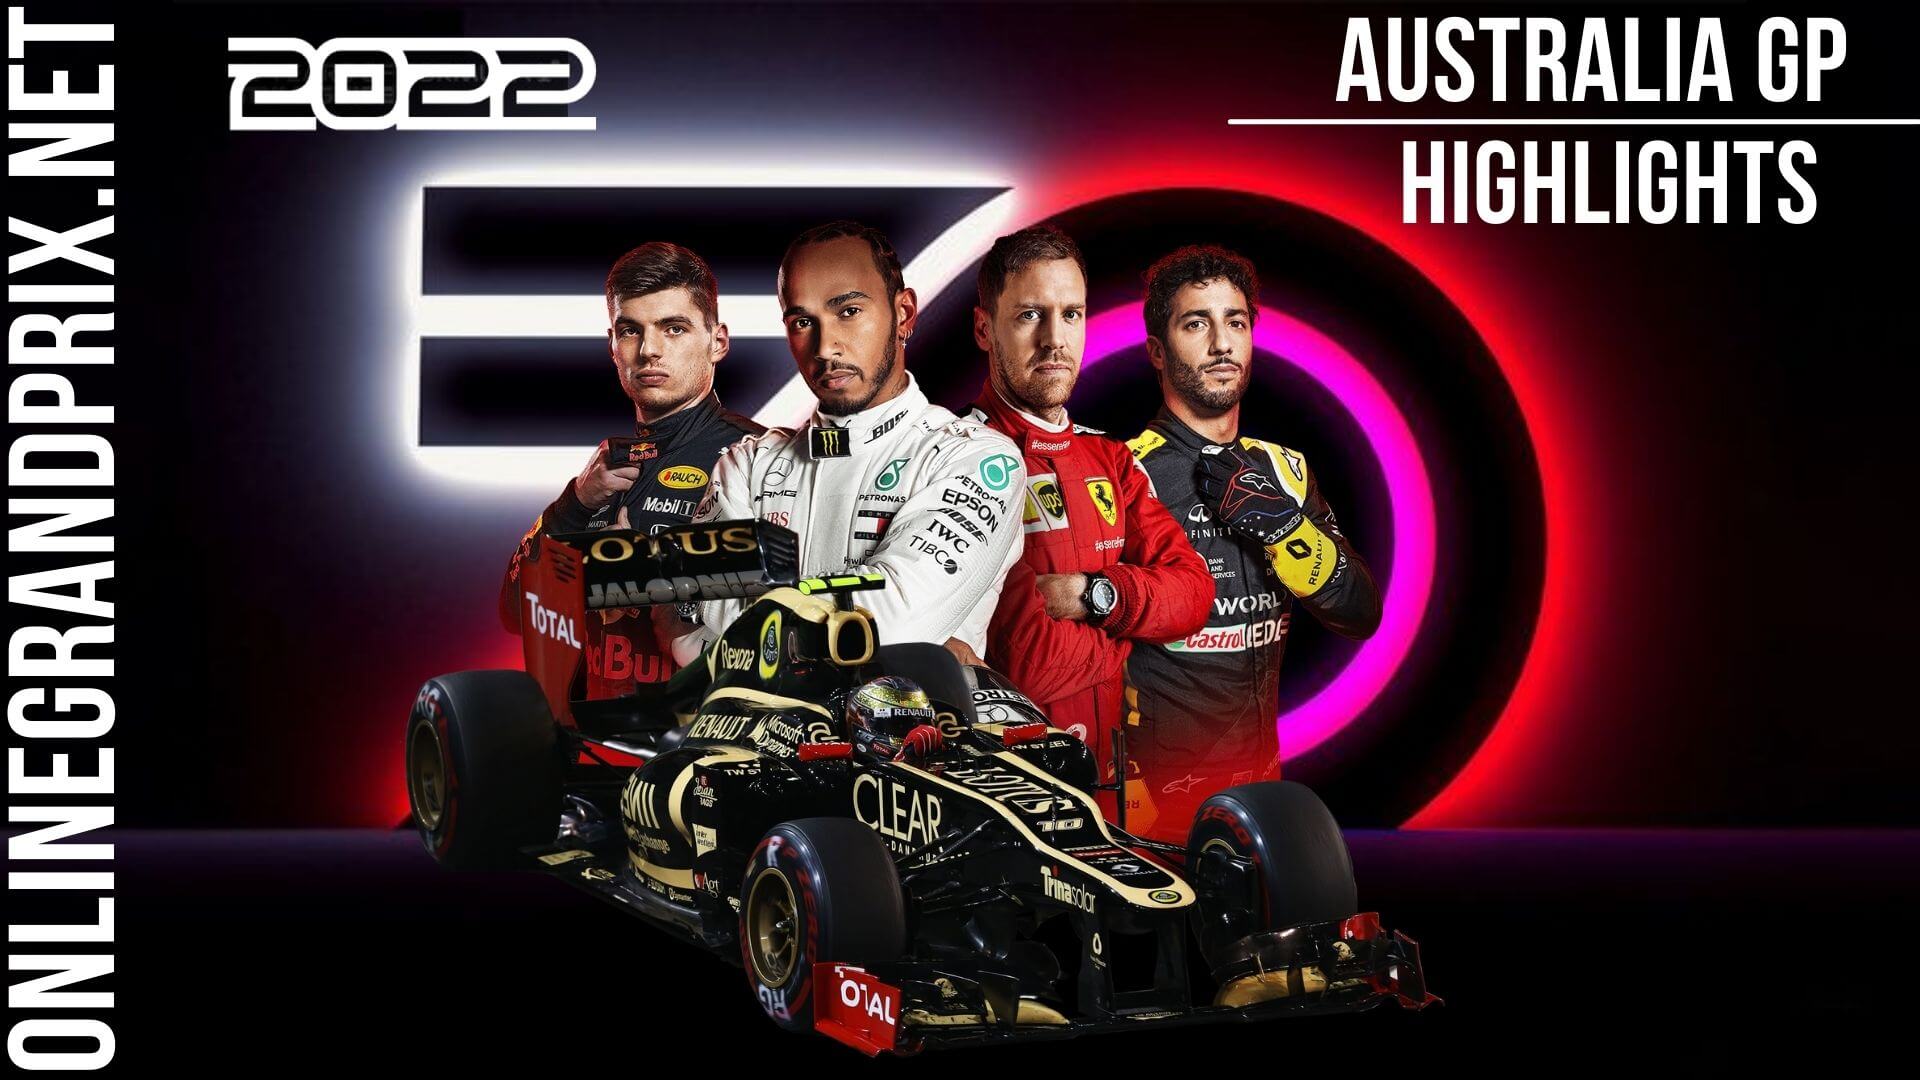 Australia GP F1 Highlights 2022